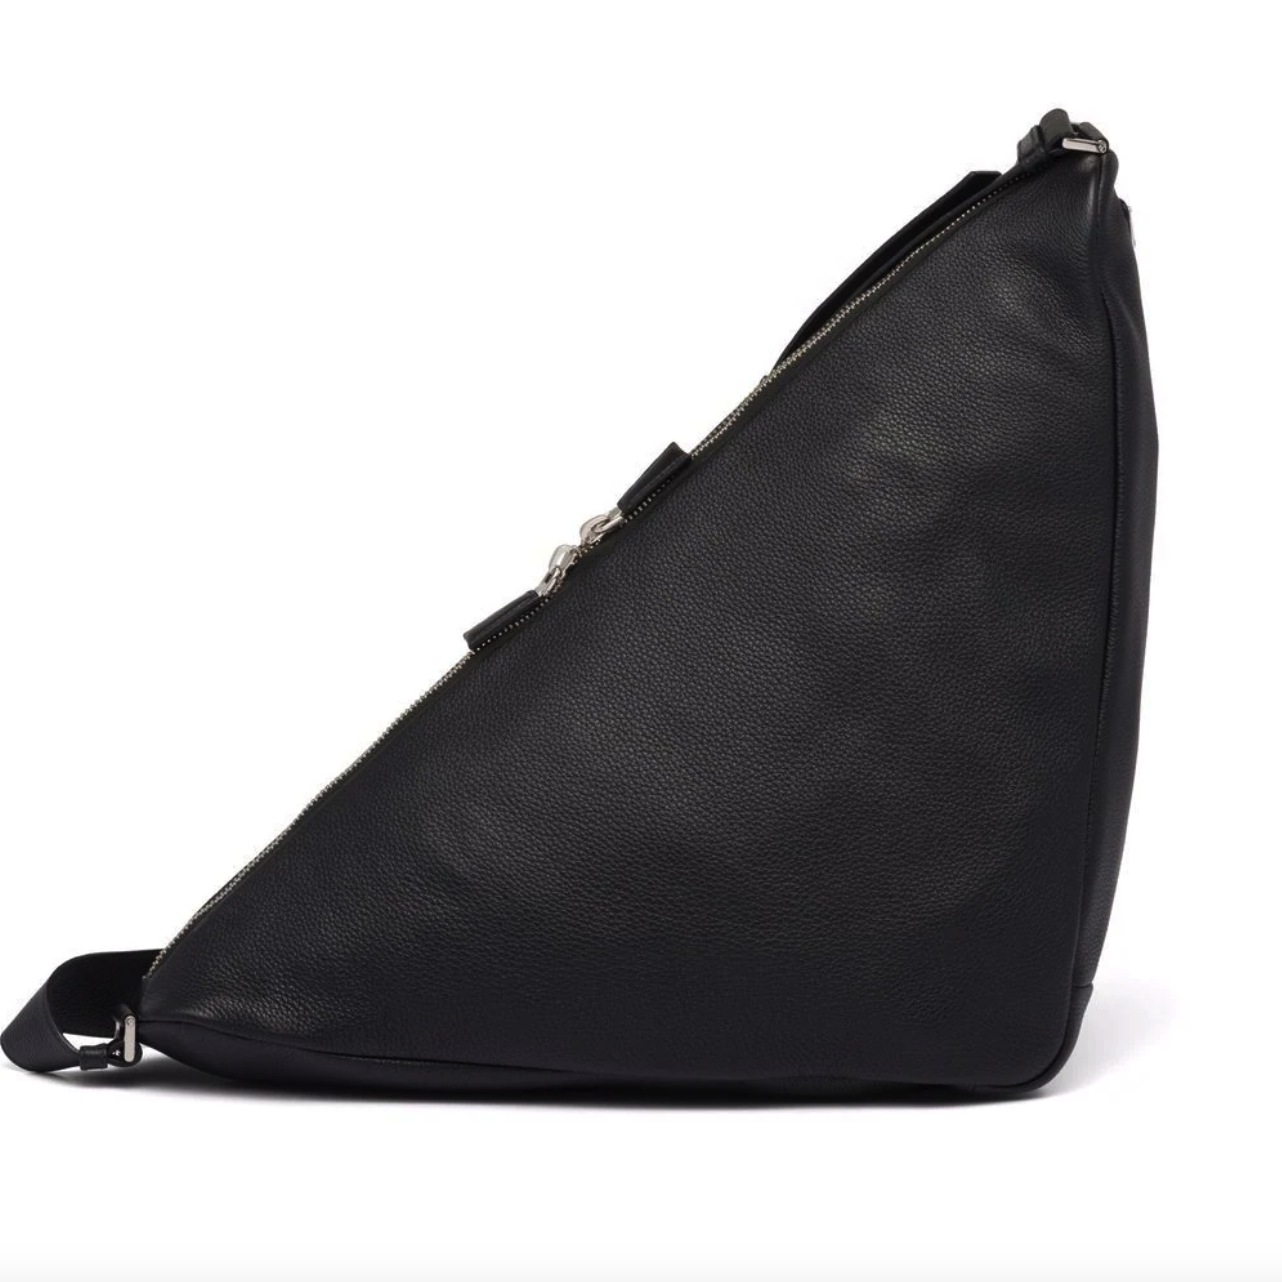 Prada Leather Shoulder Handbags